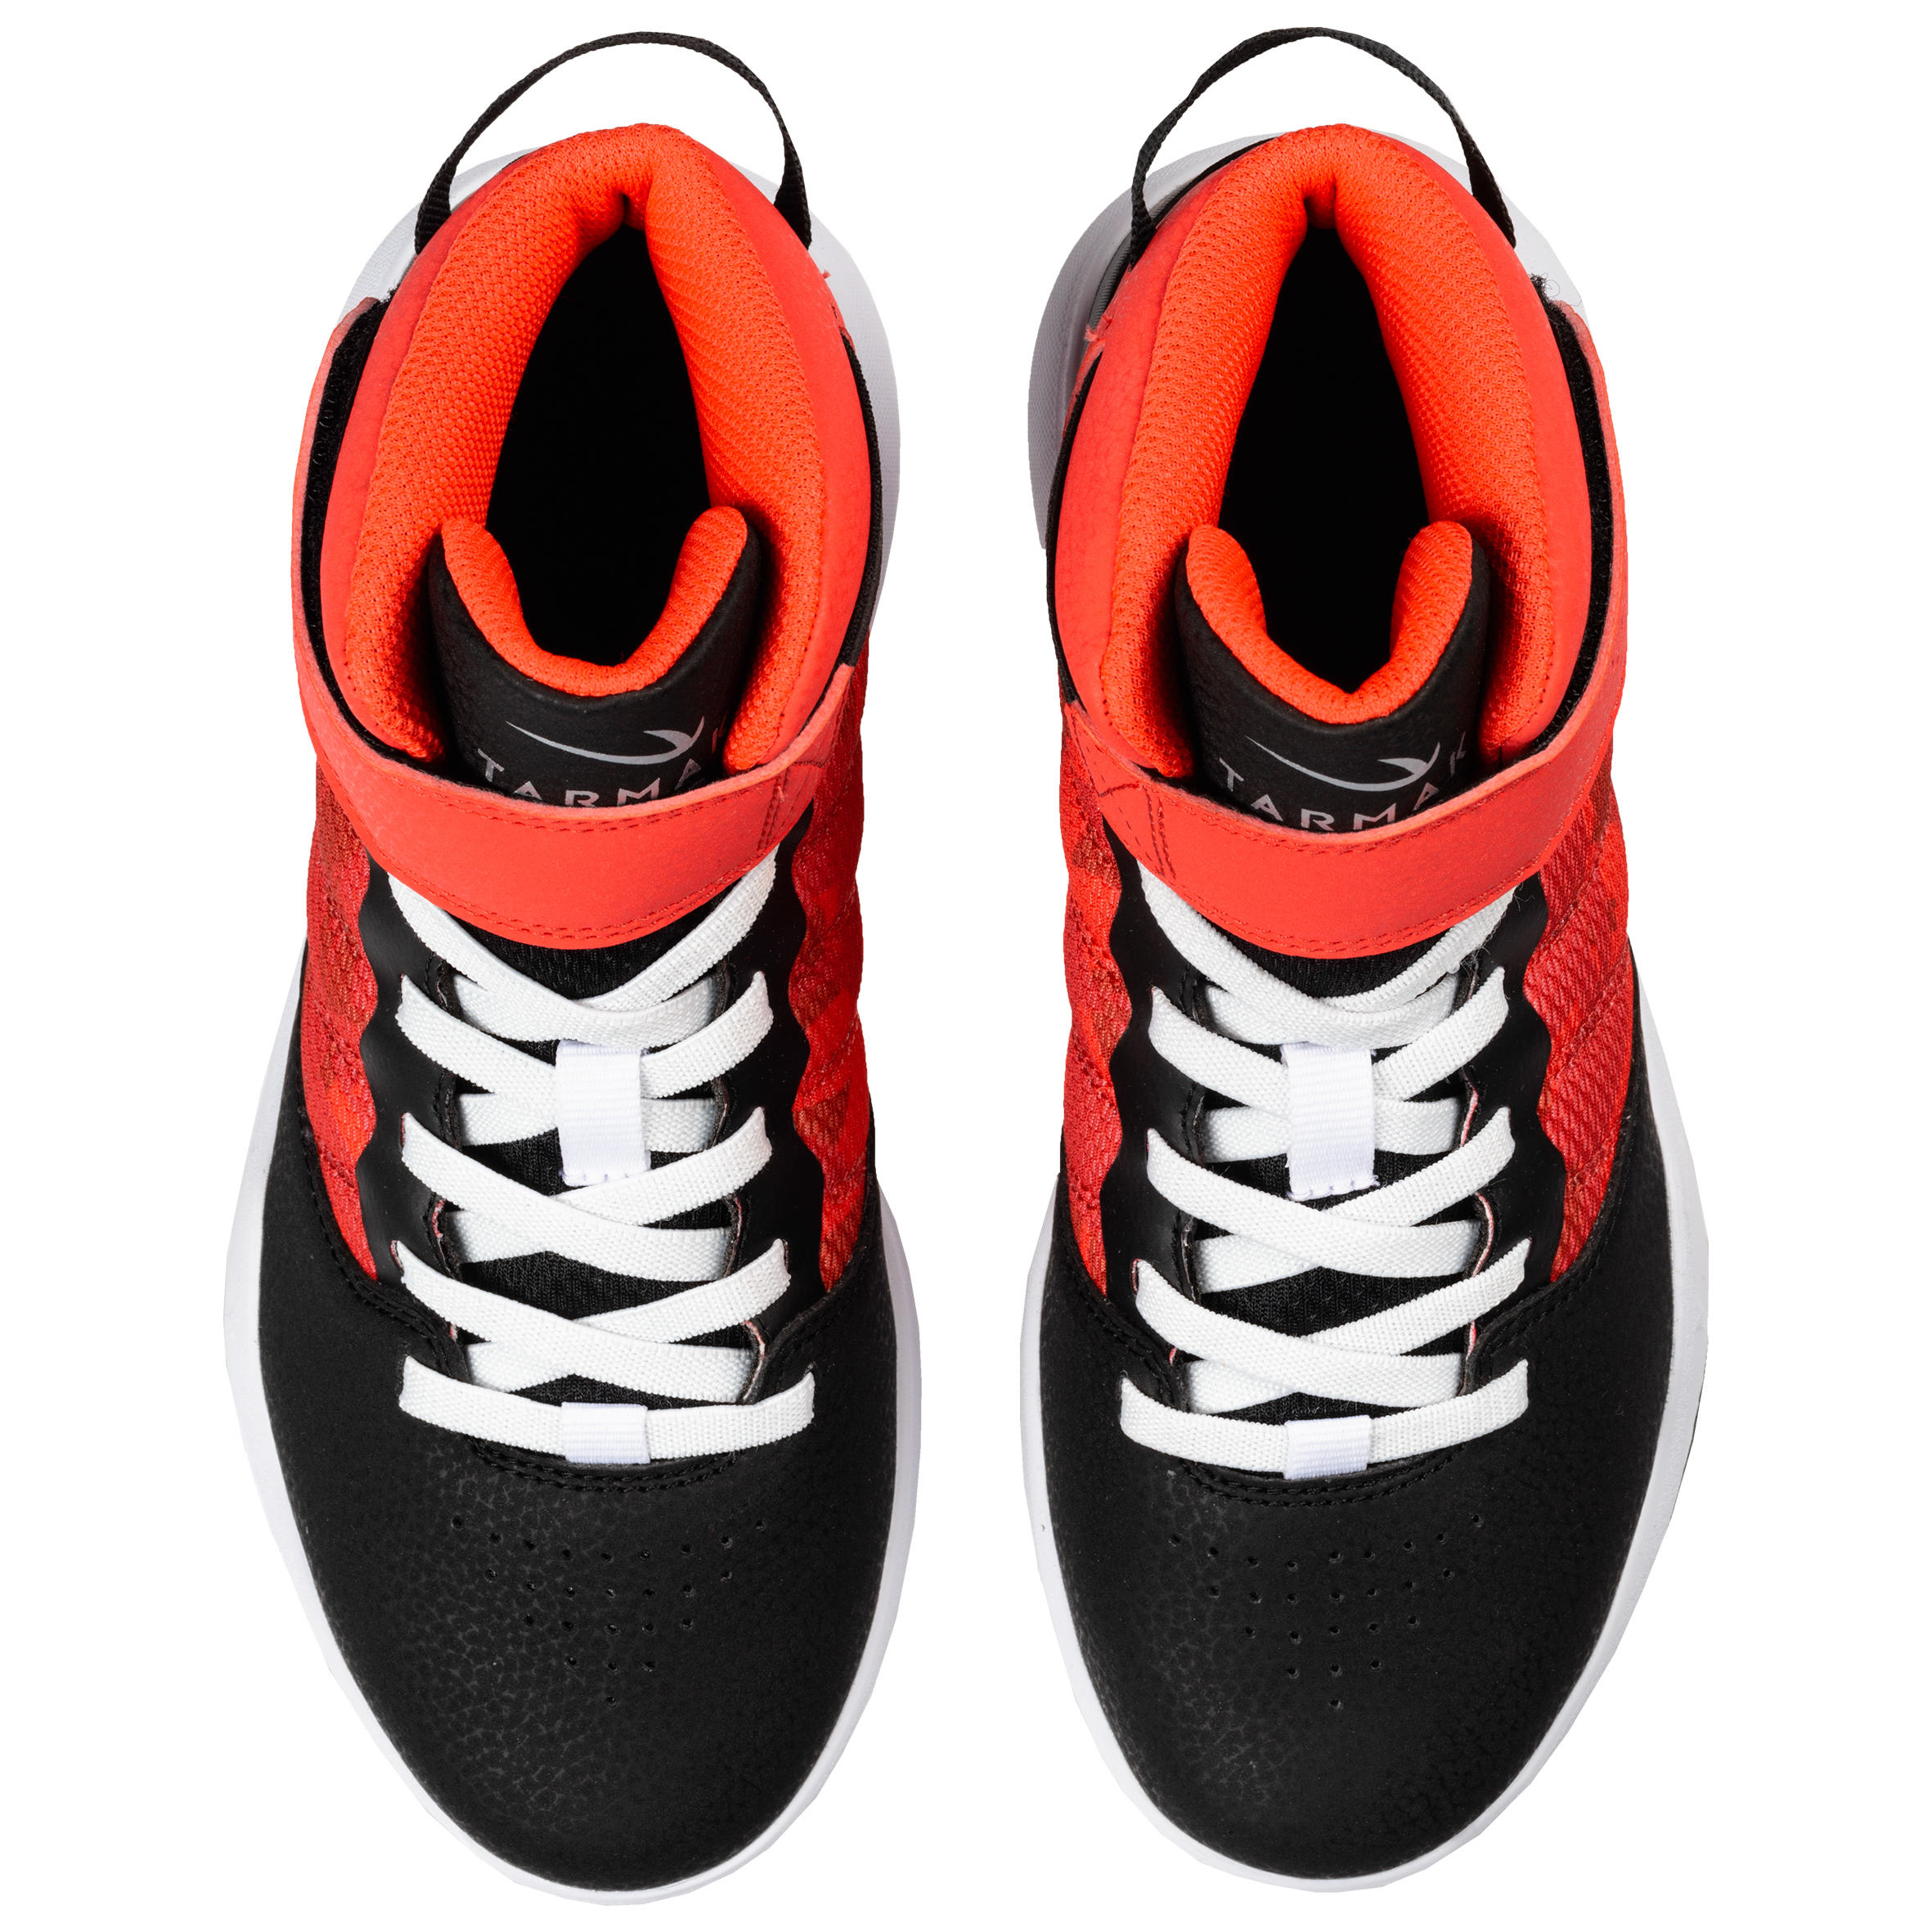 Kids' Beginner Basketball Shoes - SE100 Black/Red - TARMAK